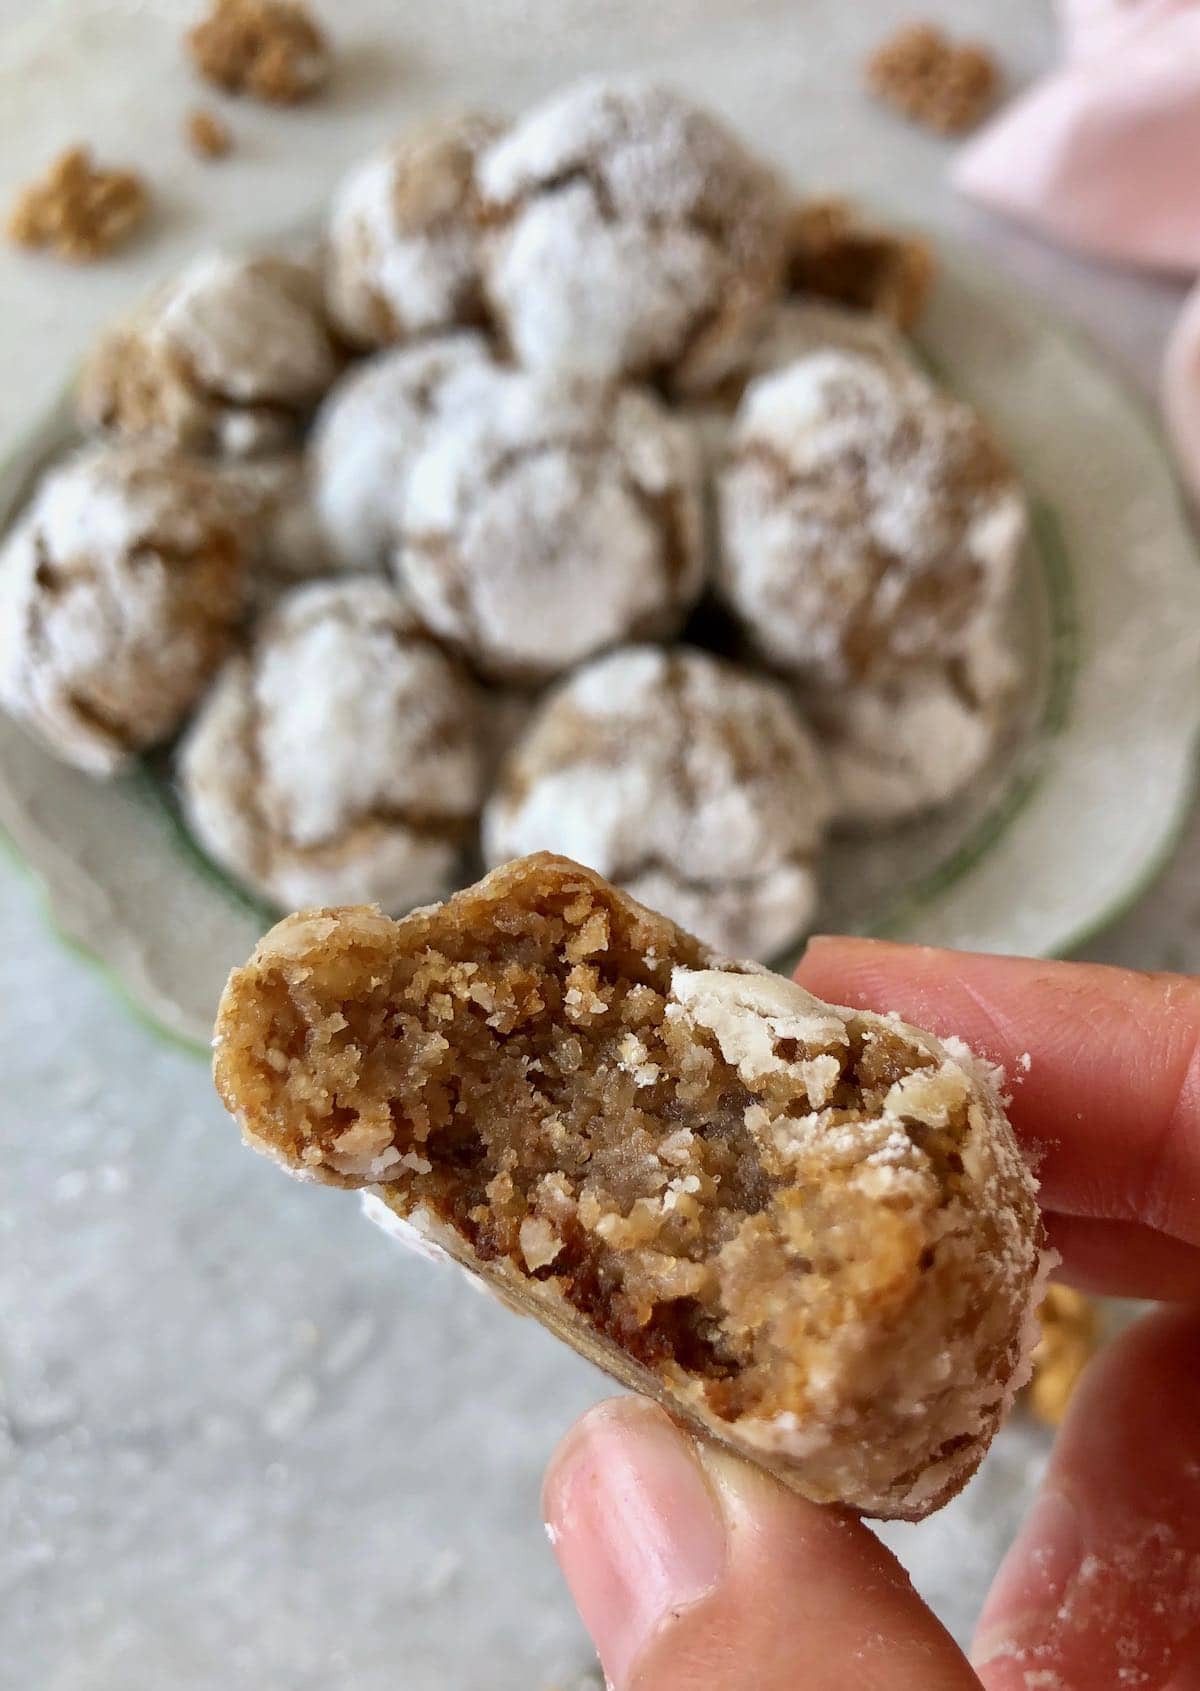 walnut cookies from scratch